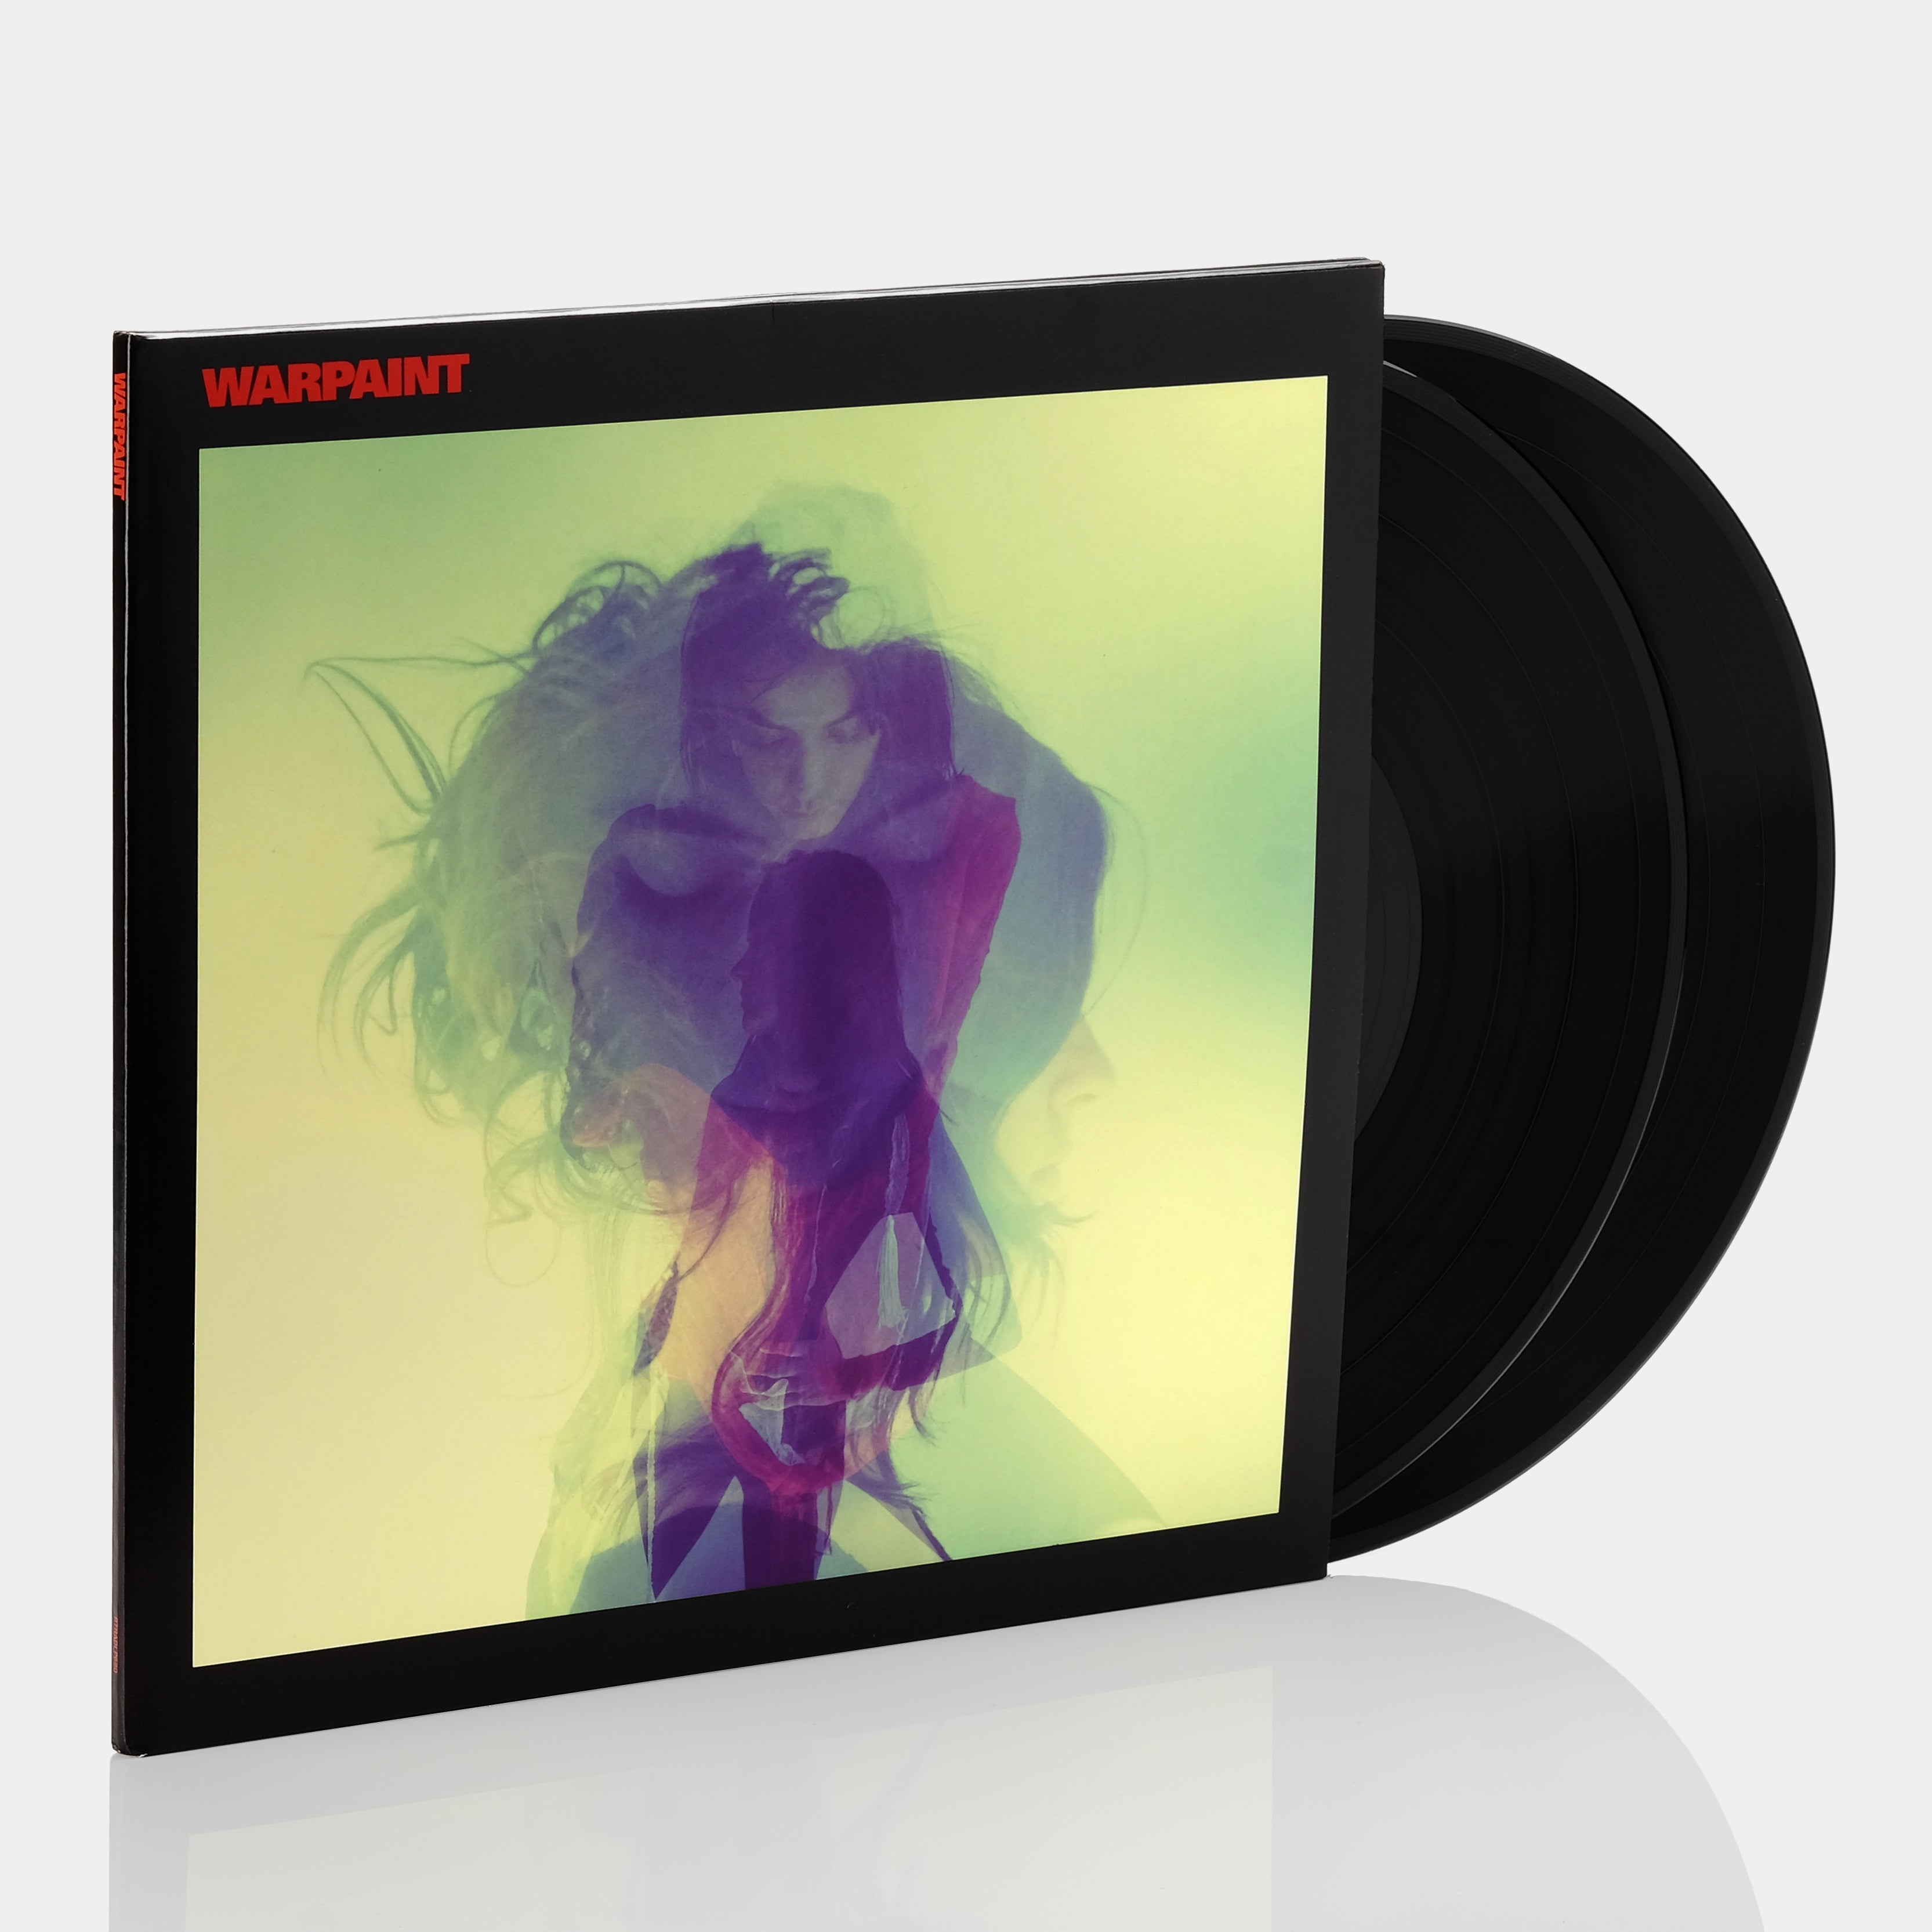 Warpaint - Warpaint 2xLP Vinyl Record